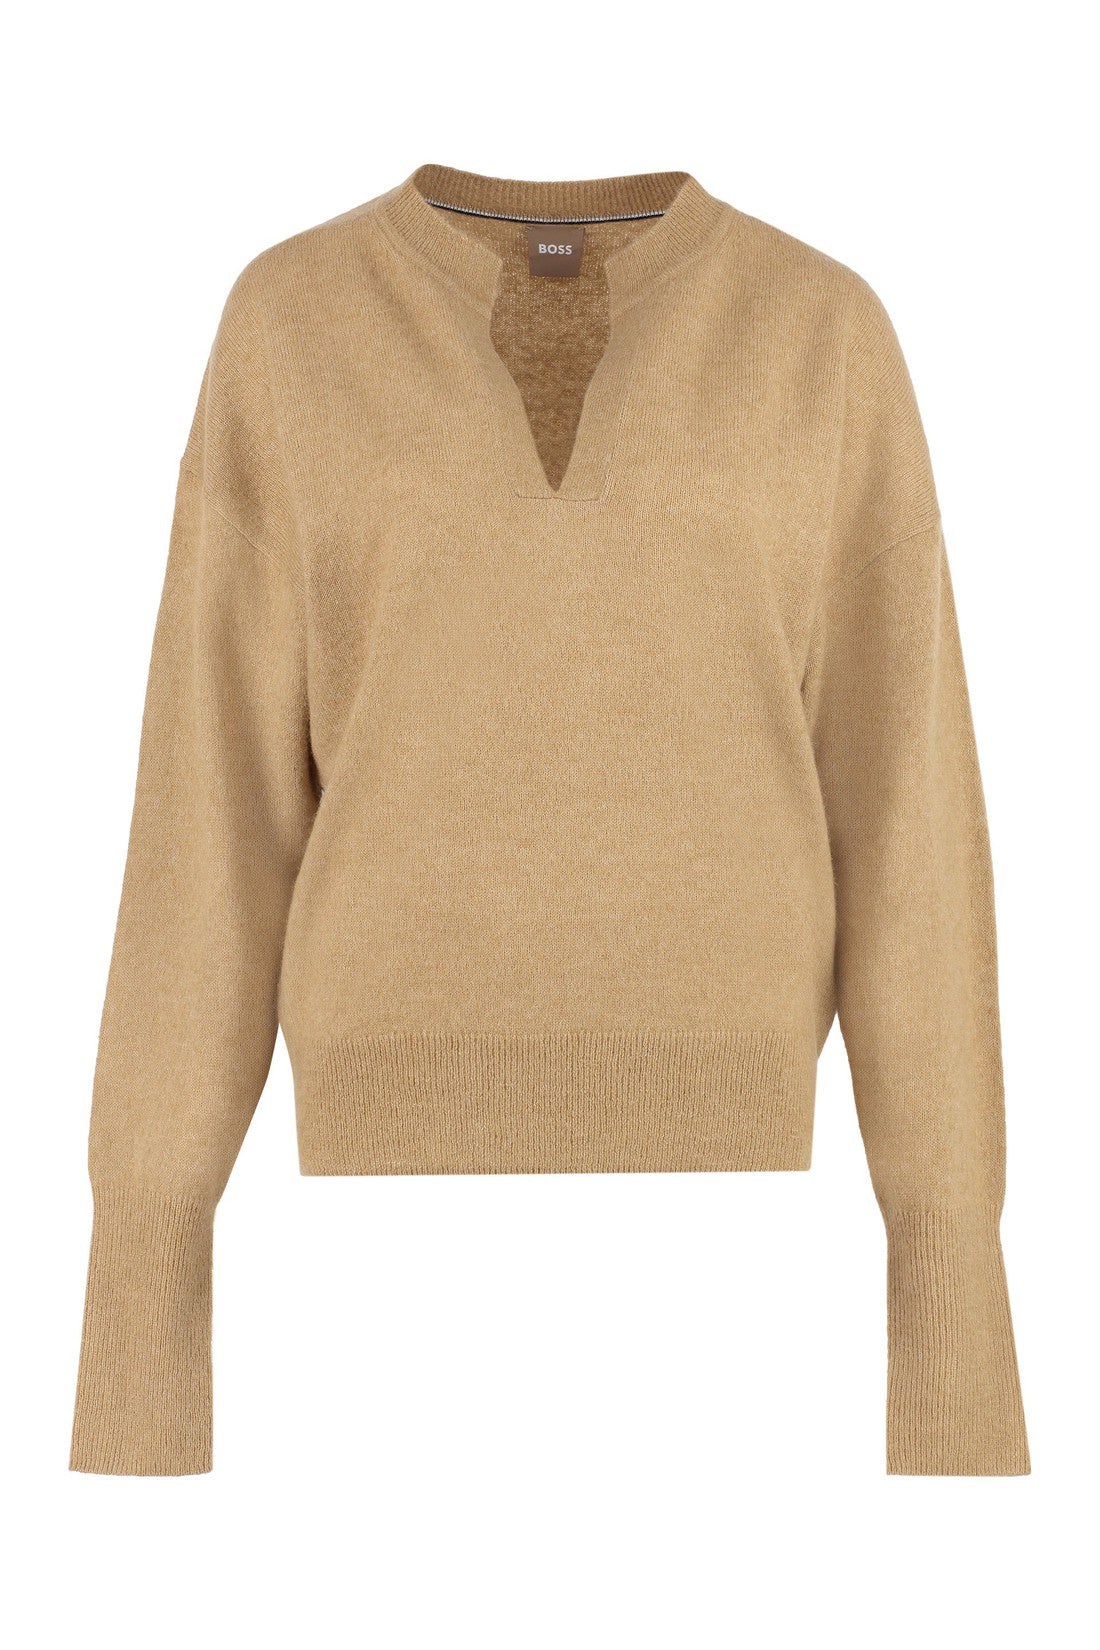 BOSS-OUTLET-SALE-Alpaca blend sweater-ARCHIVIST